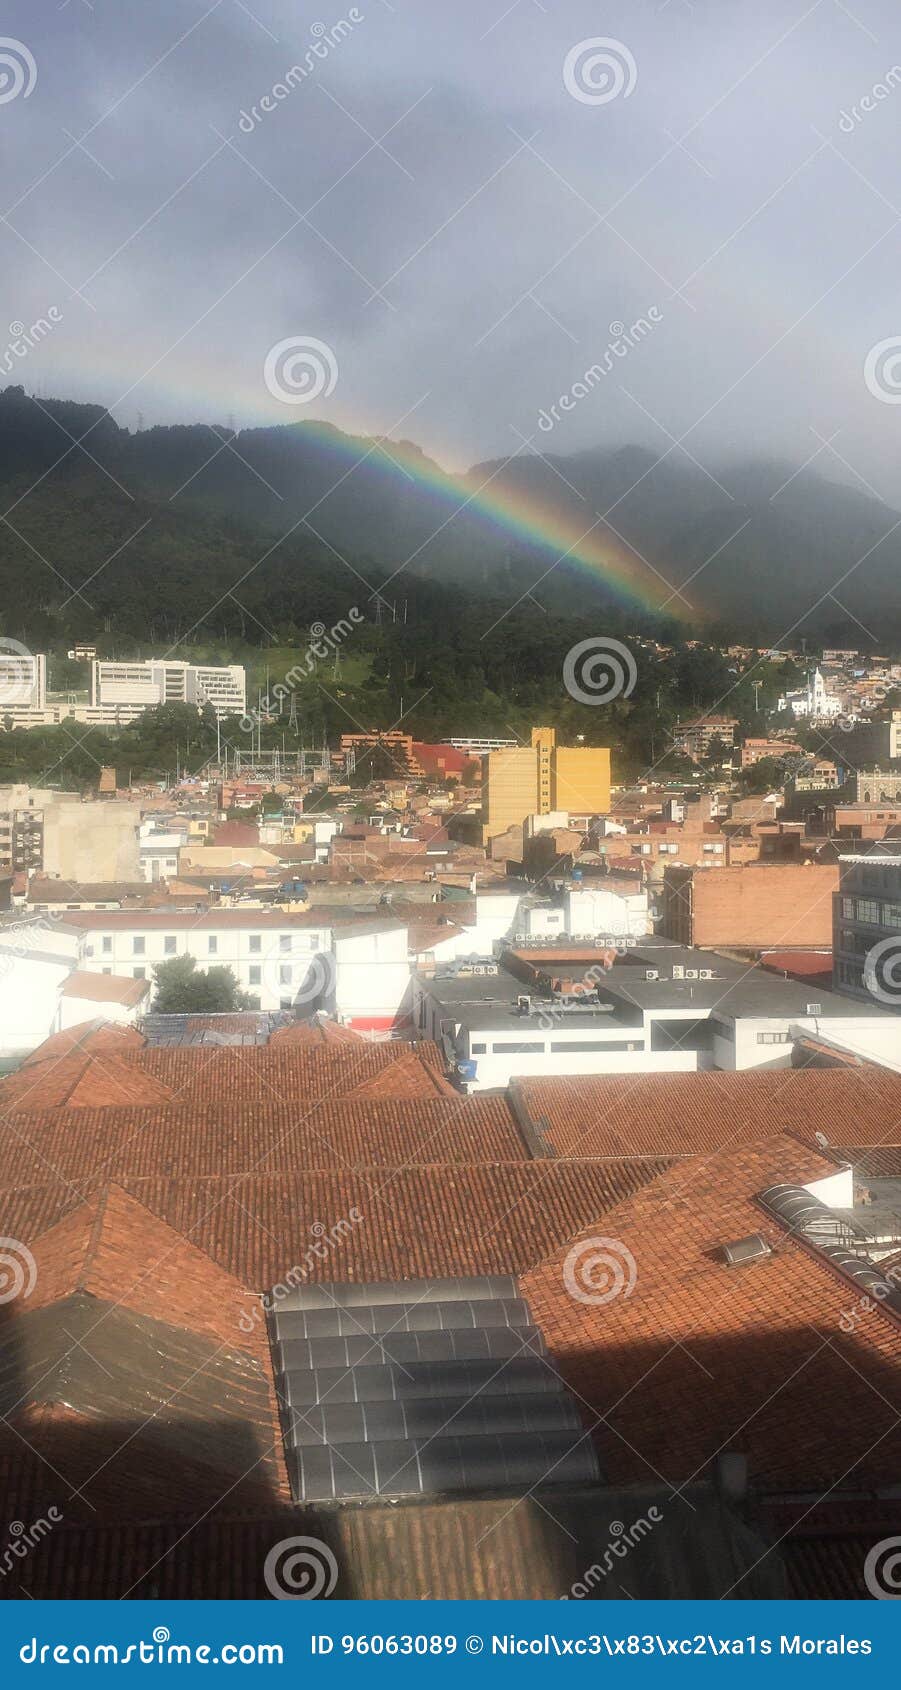 rainbow - arco iris